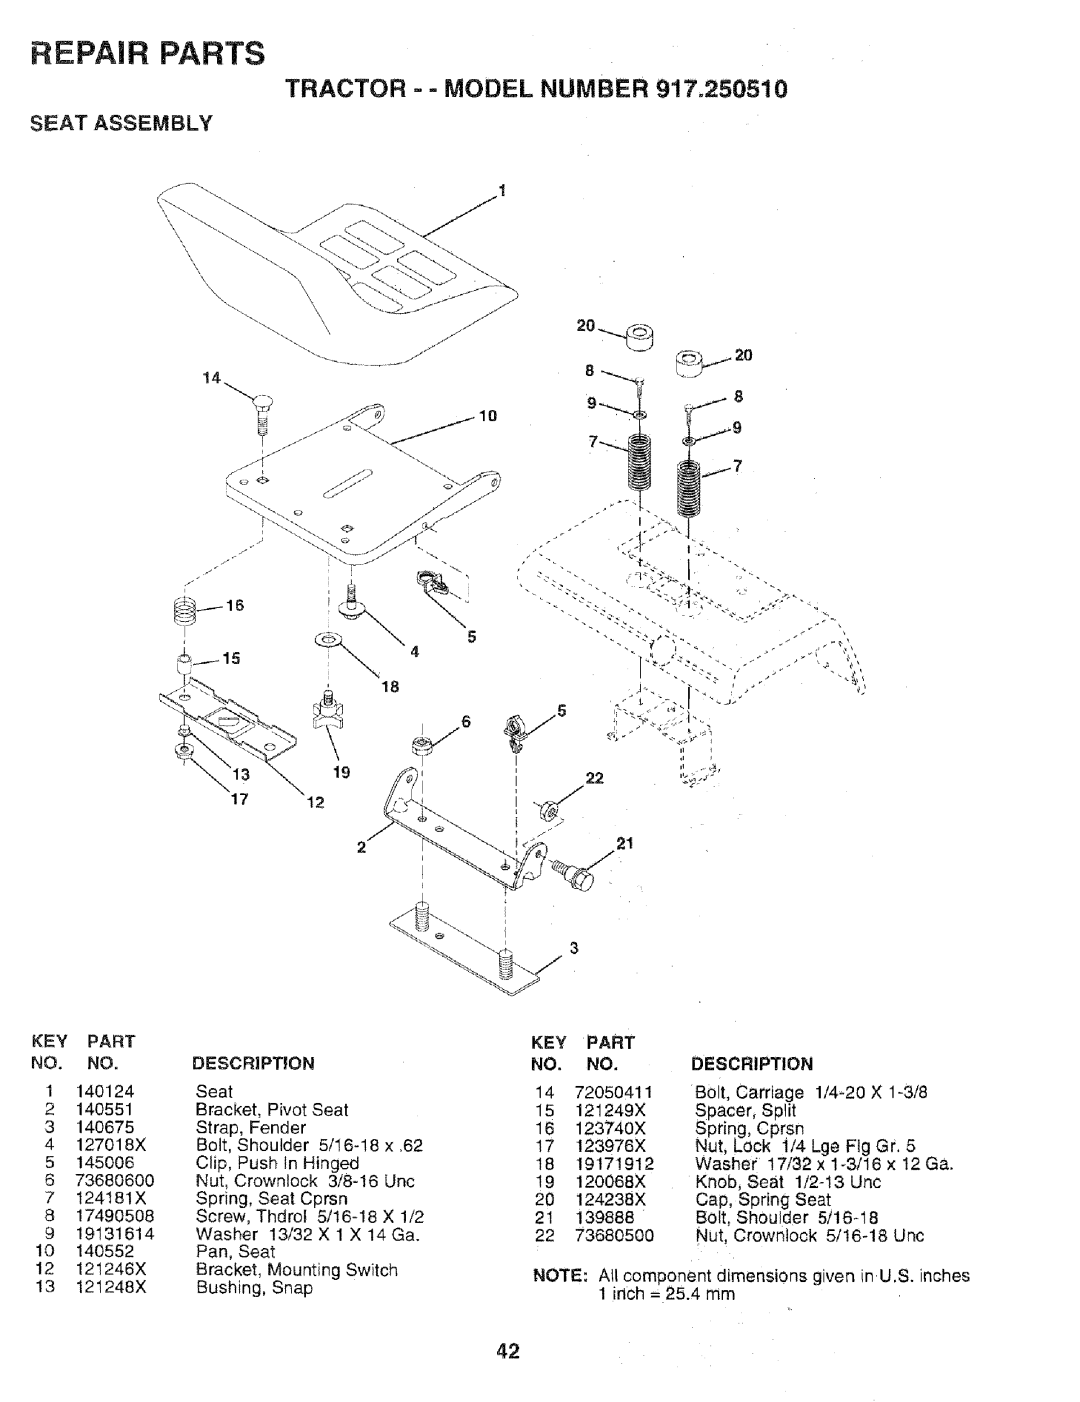 Sears 917.25051 manual Repair Parts, TRACTOR = - MODEL NUMBER 917o250510, Seat Assembly, Key Part No. No. Description 